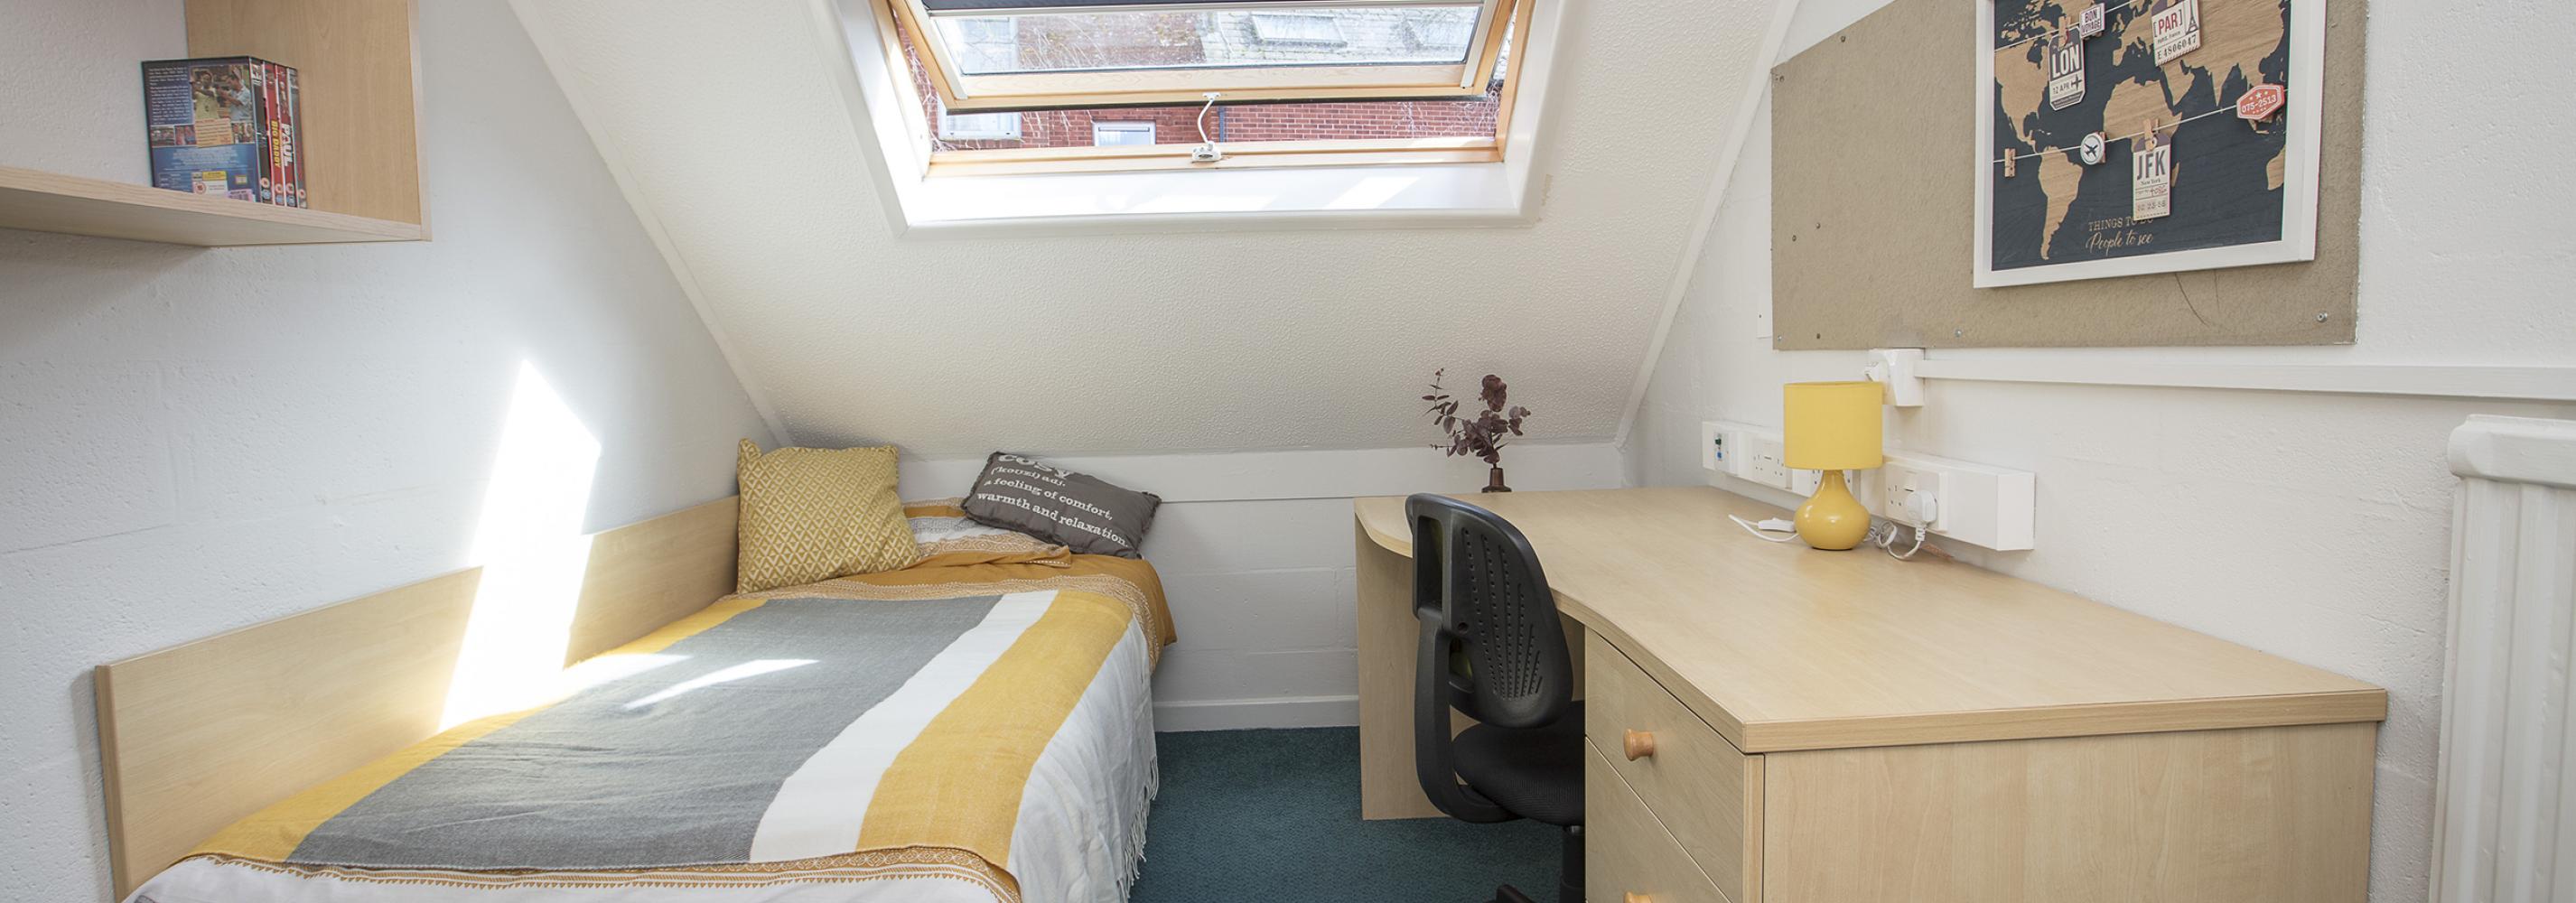 Loft room, single bed, desk, chair, noticeboard, shelves, overhead window, radiator